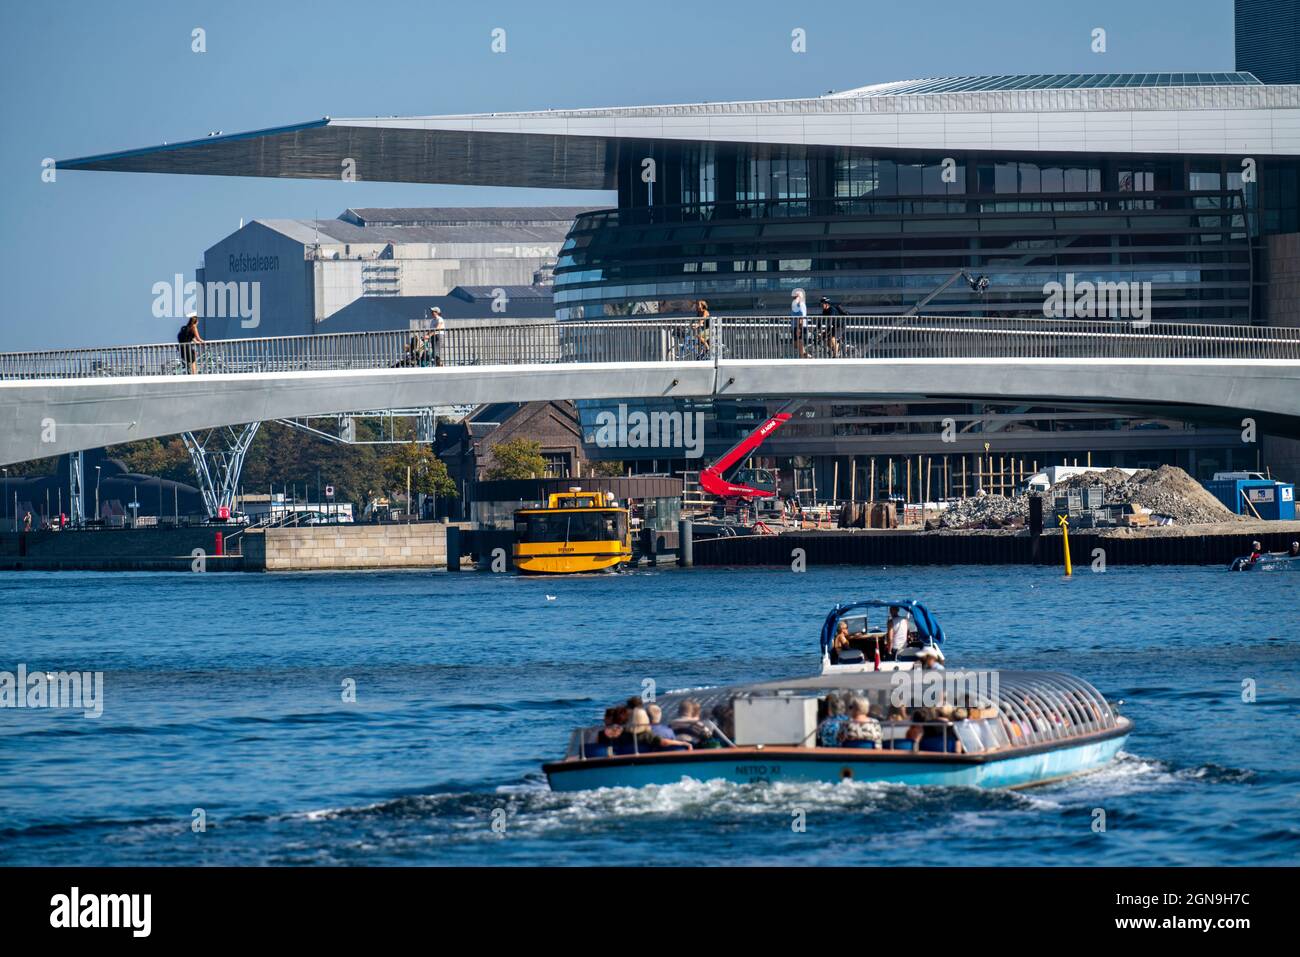 Opera House, Cycle Bridge, Inderhavnsbroen, Harbour, Canal Cruise Boat, Copenhagen, Denmark, Stock Photo